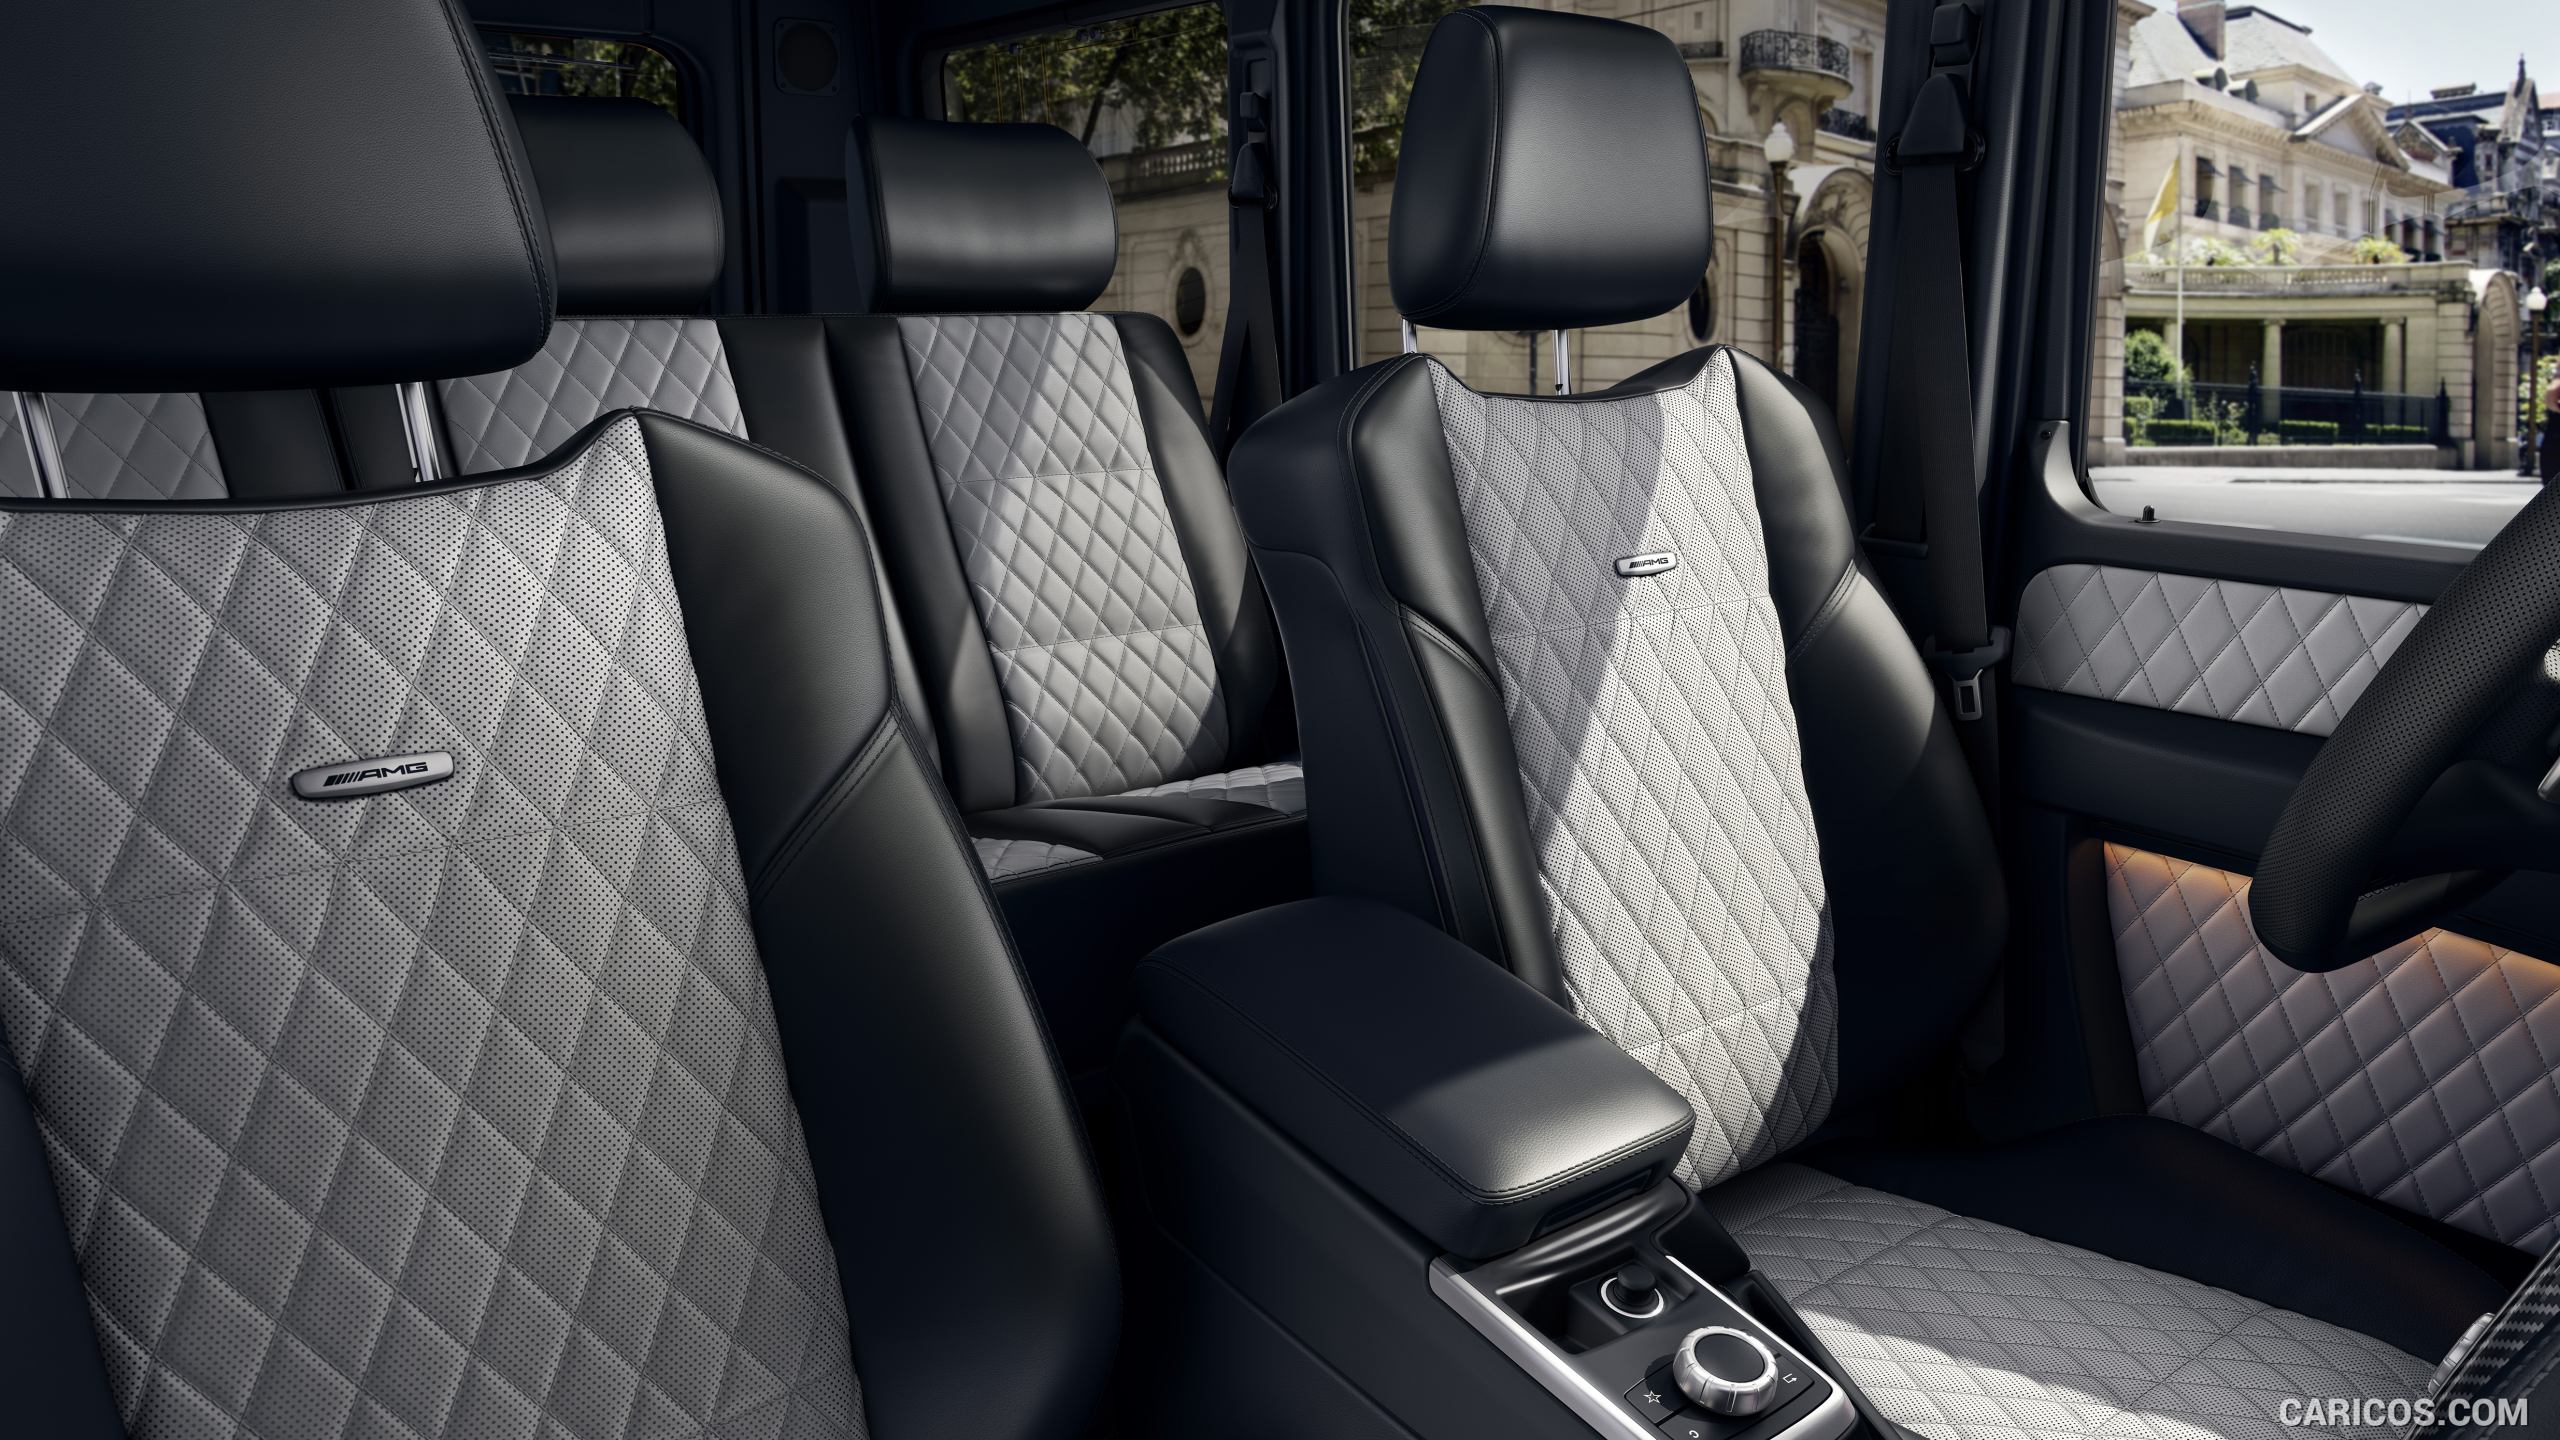 2016 Mercedes-AMG G63 Edition 463 (Designo Nappa Leather Black/Porcelain, AMG Carbon Trim Parts) - Interior, #12 of 48